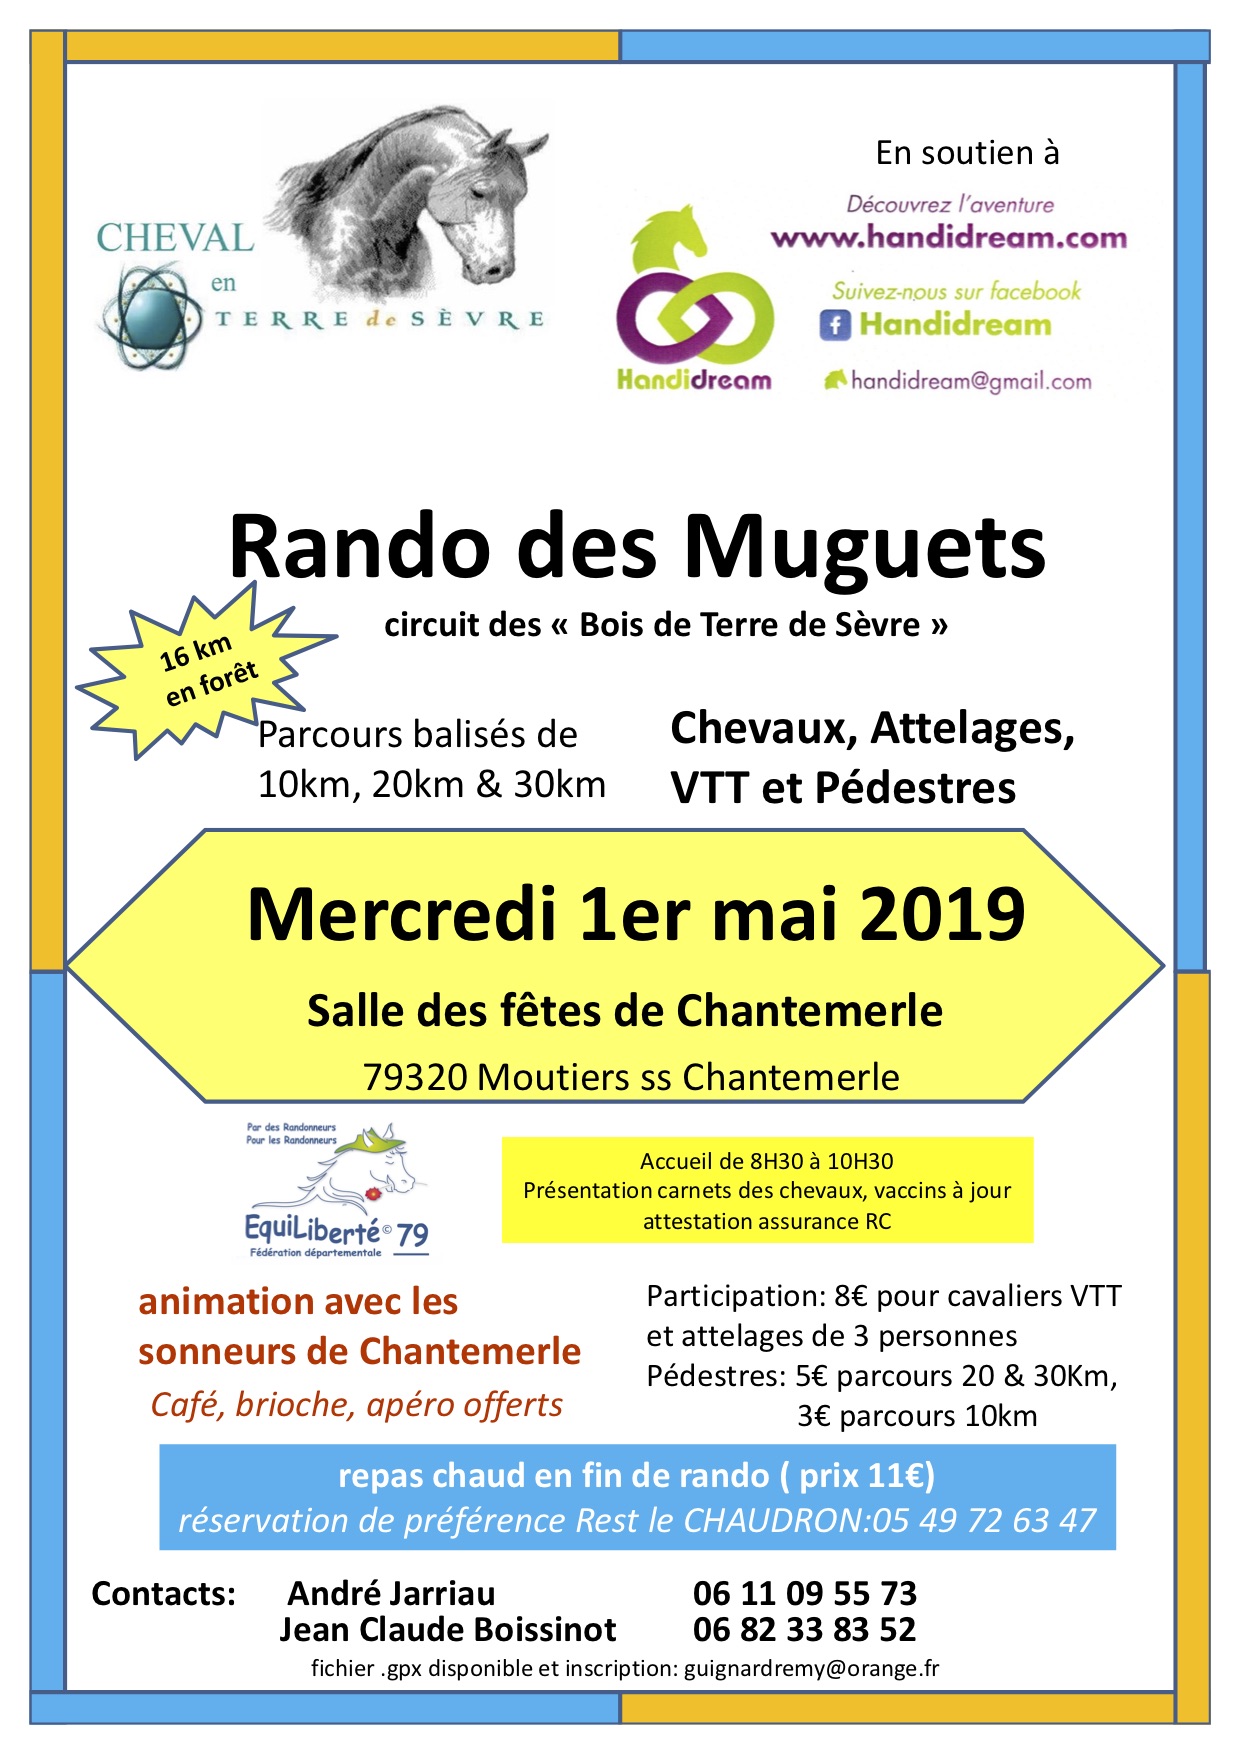 Affiche Rando des muguets 2019